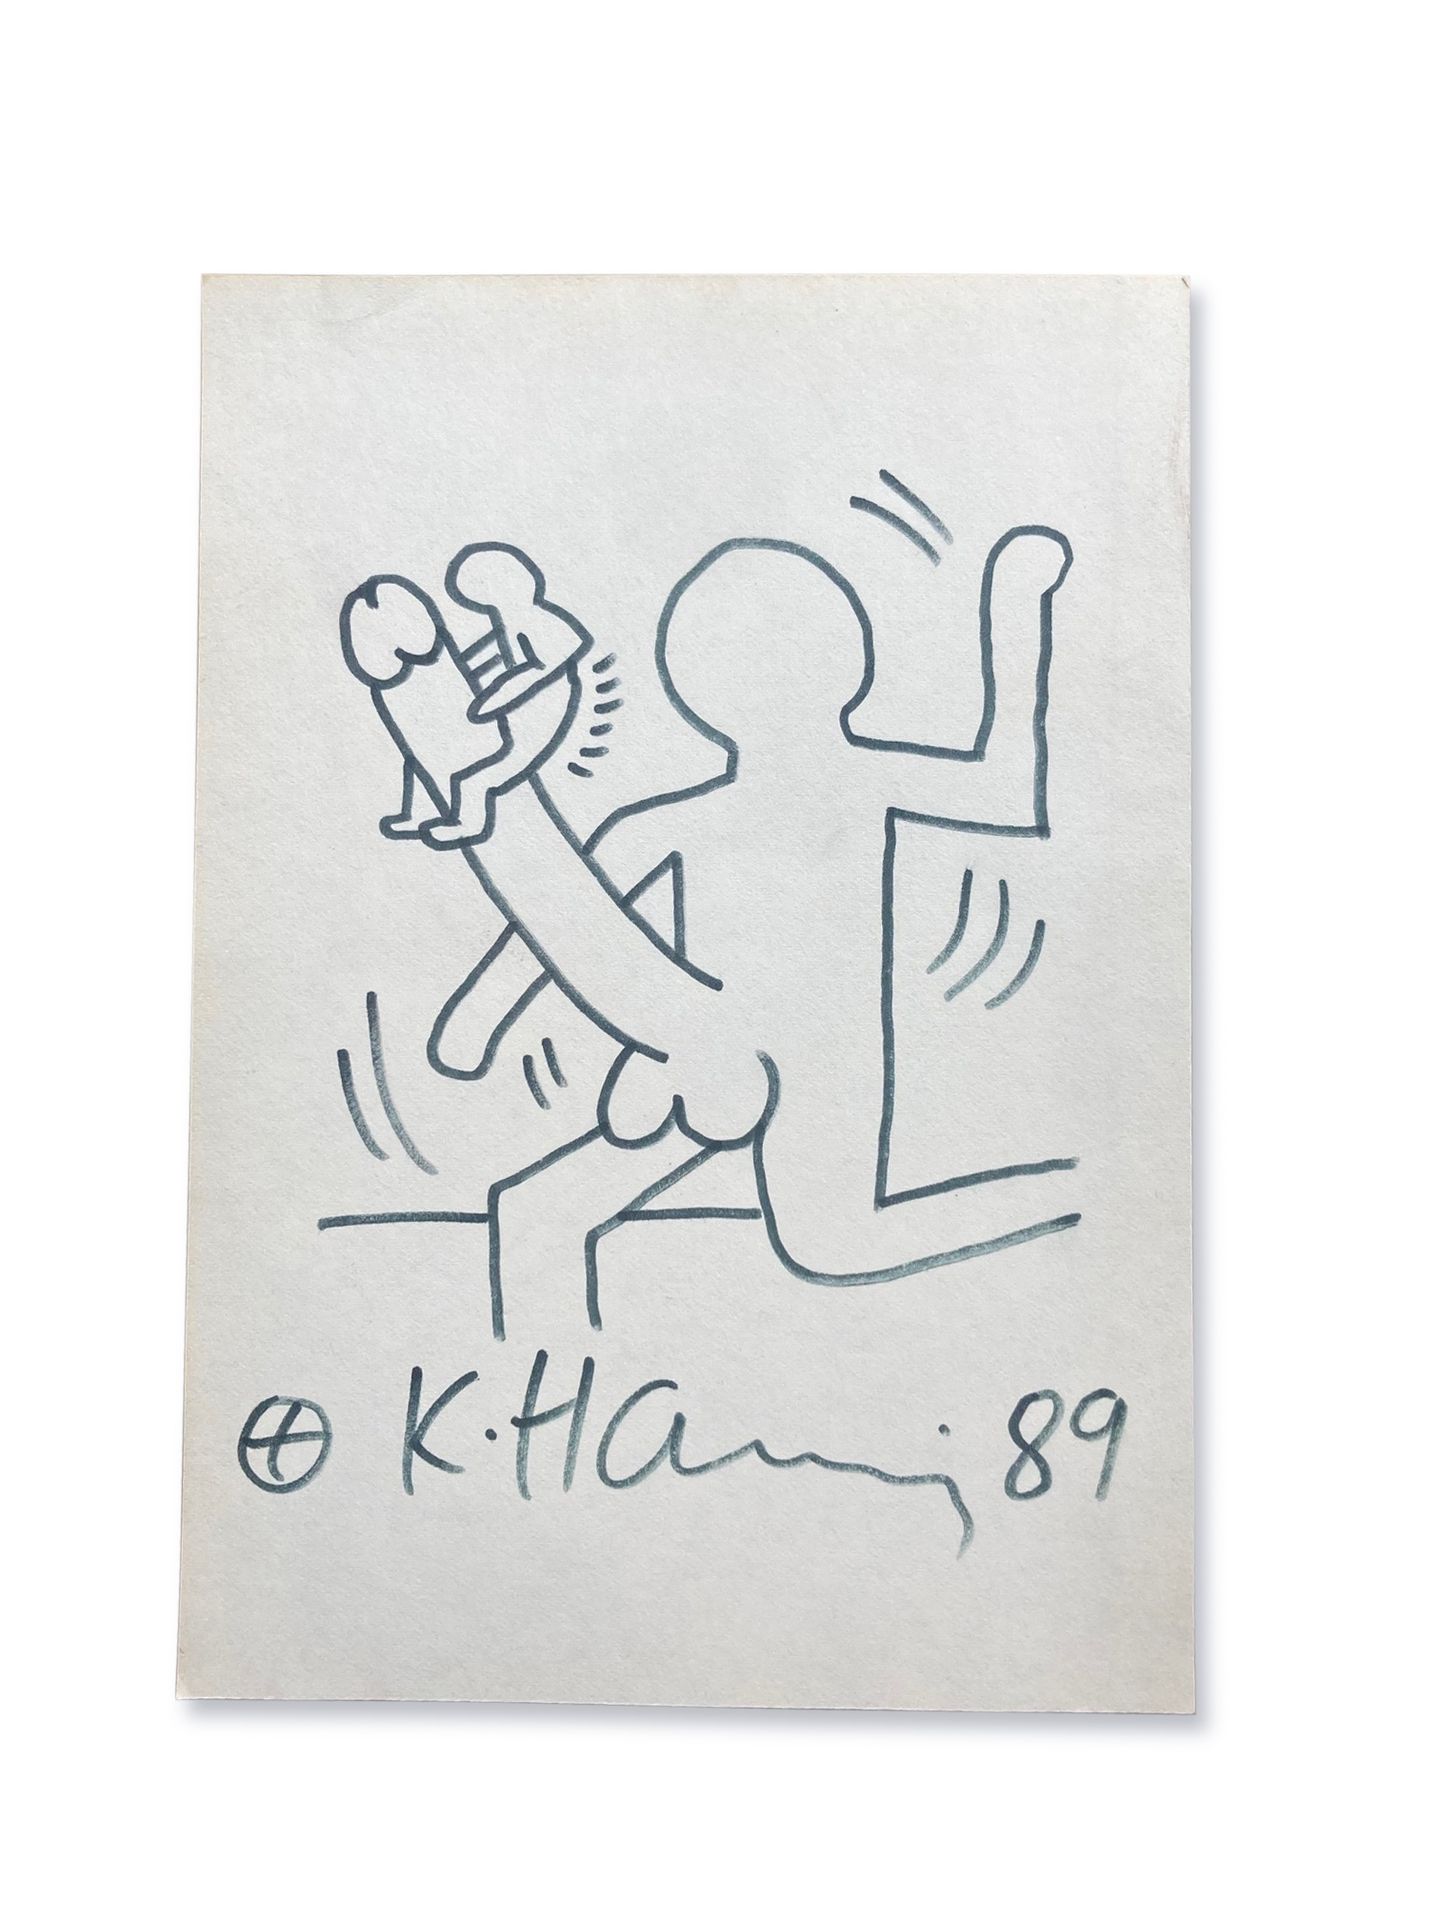 Keith HARING (1958-1990) (Attr.) Sas-titre, 1989
Felt pen drawing on paper signe&hellip;